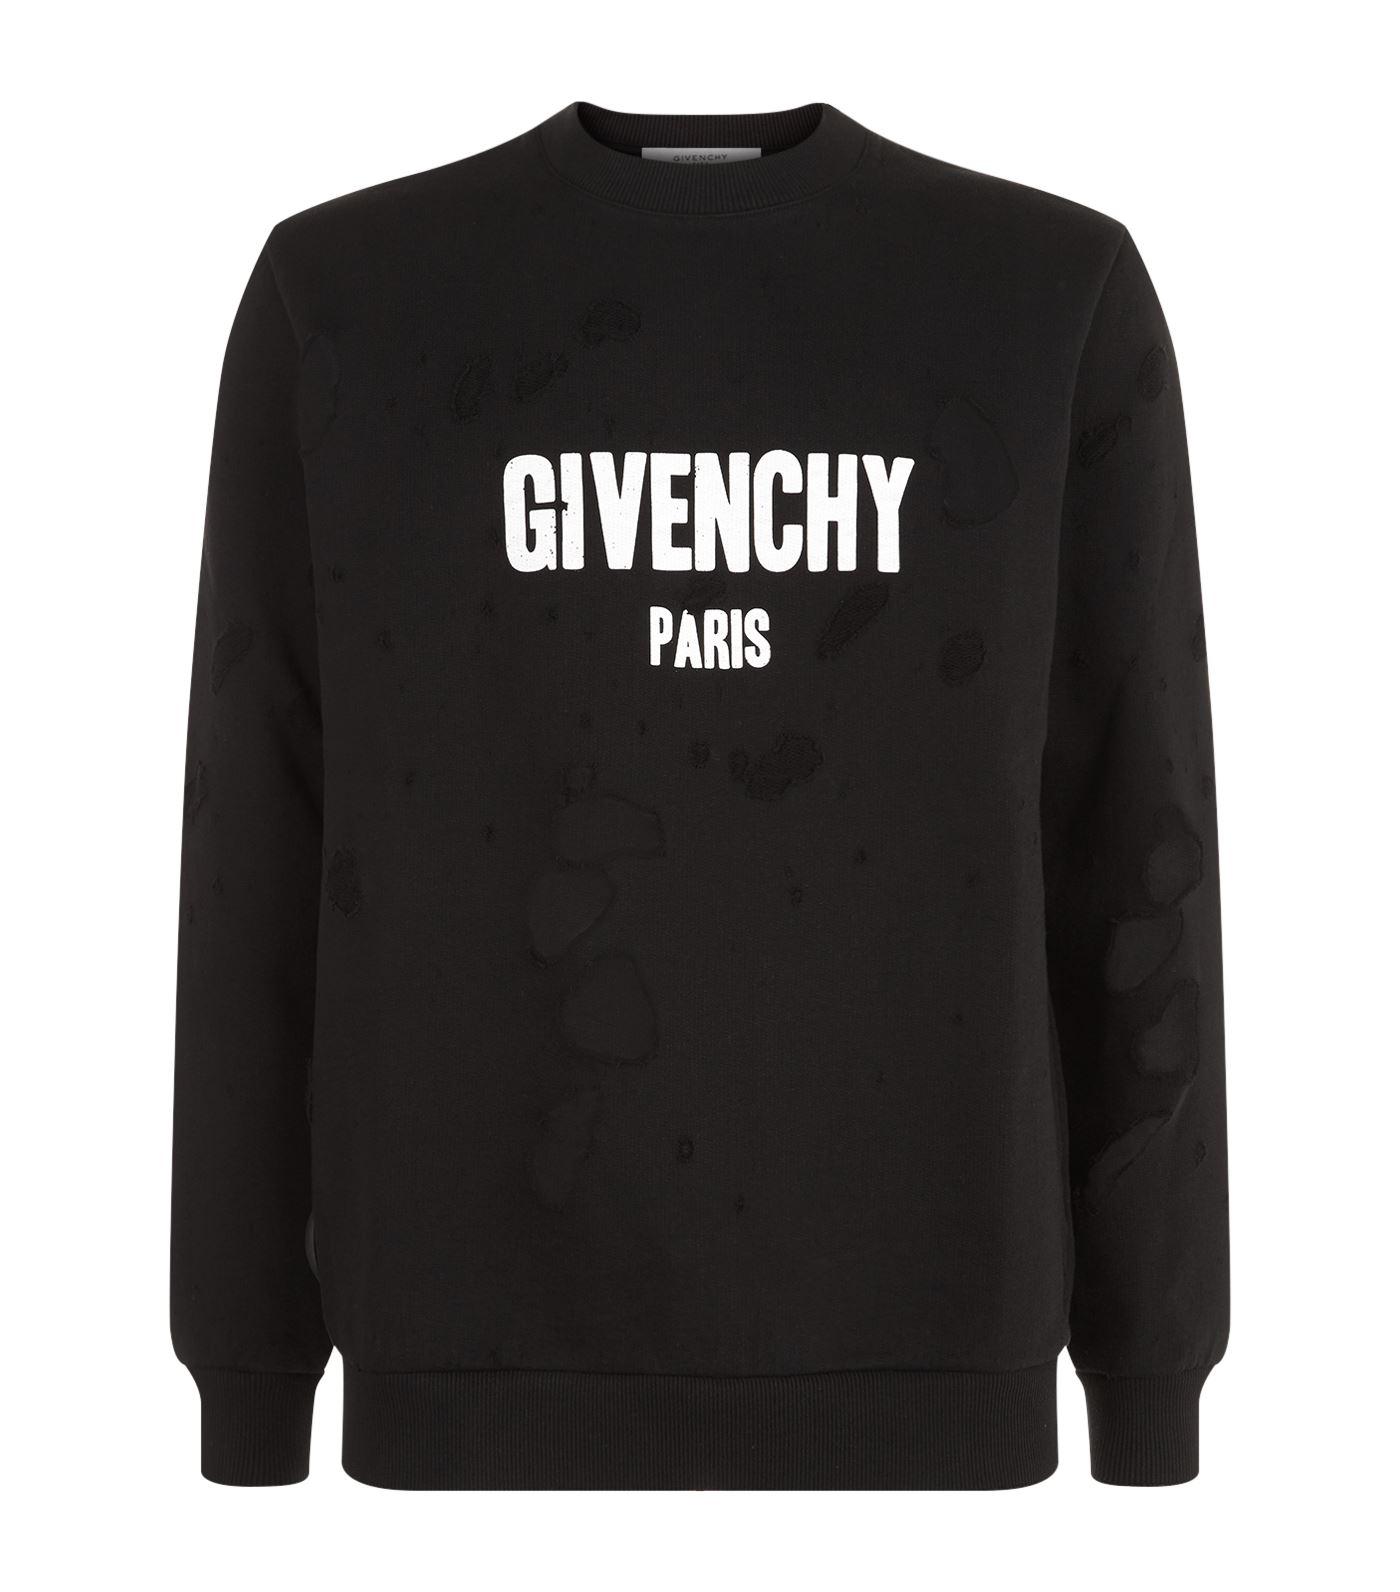 Givenchy Cotton Destroyed Logo Sweatshirt in Black for Men - Lyst